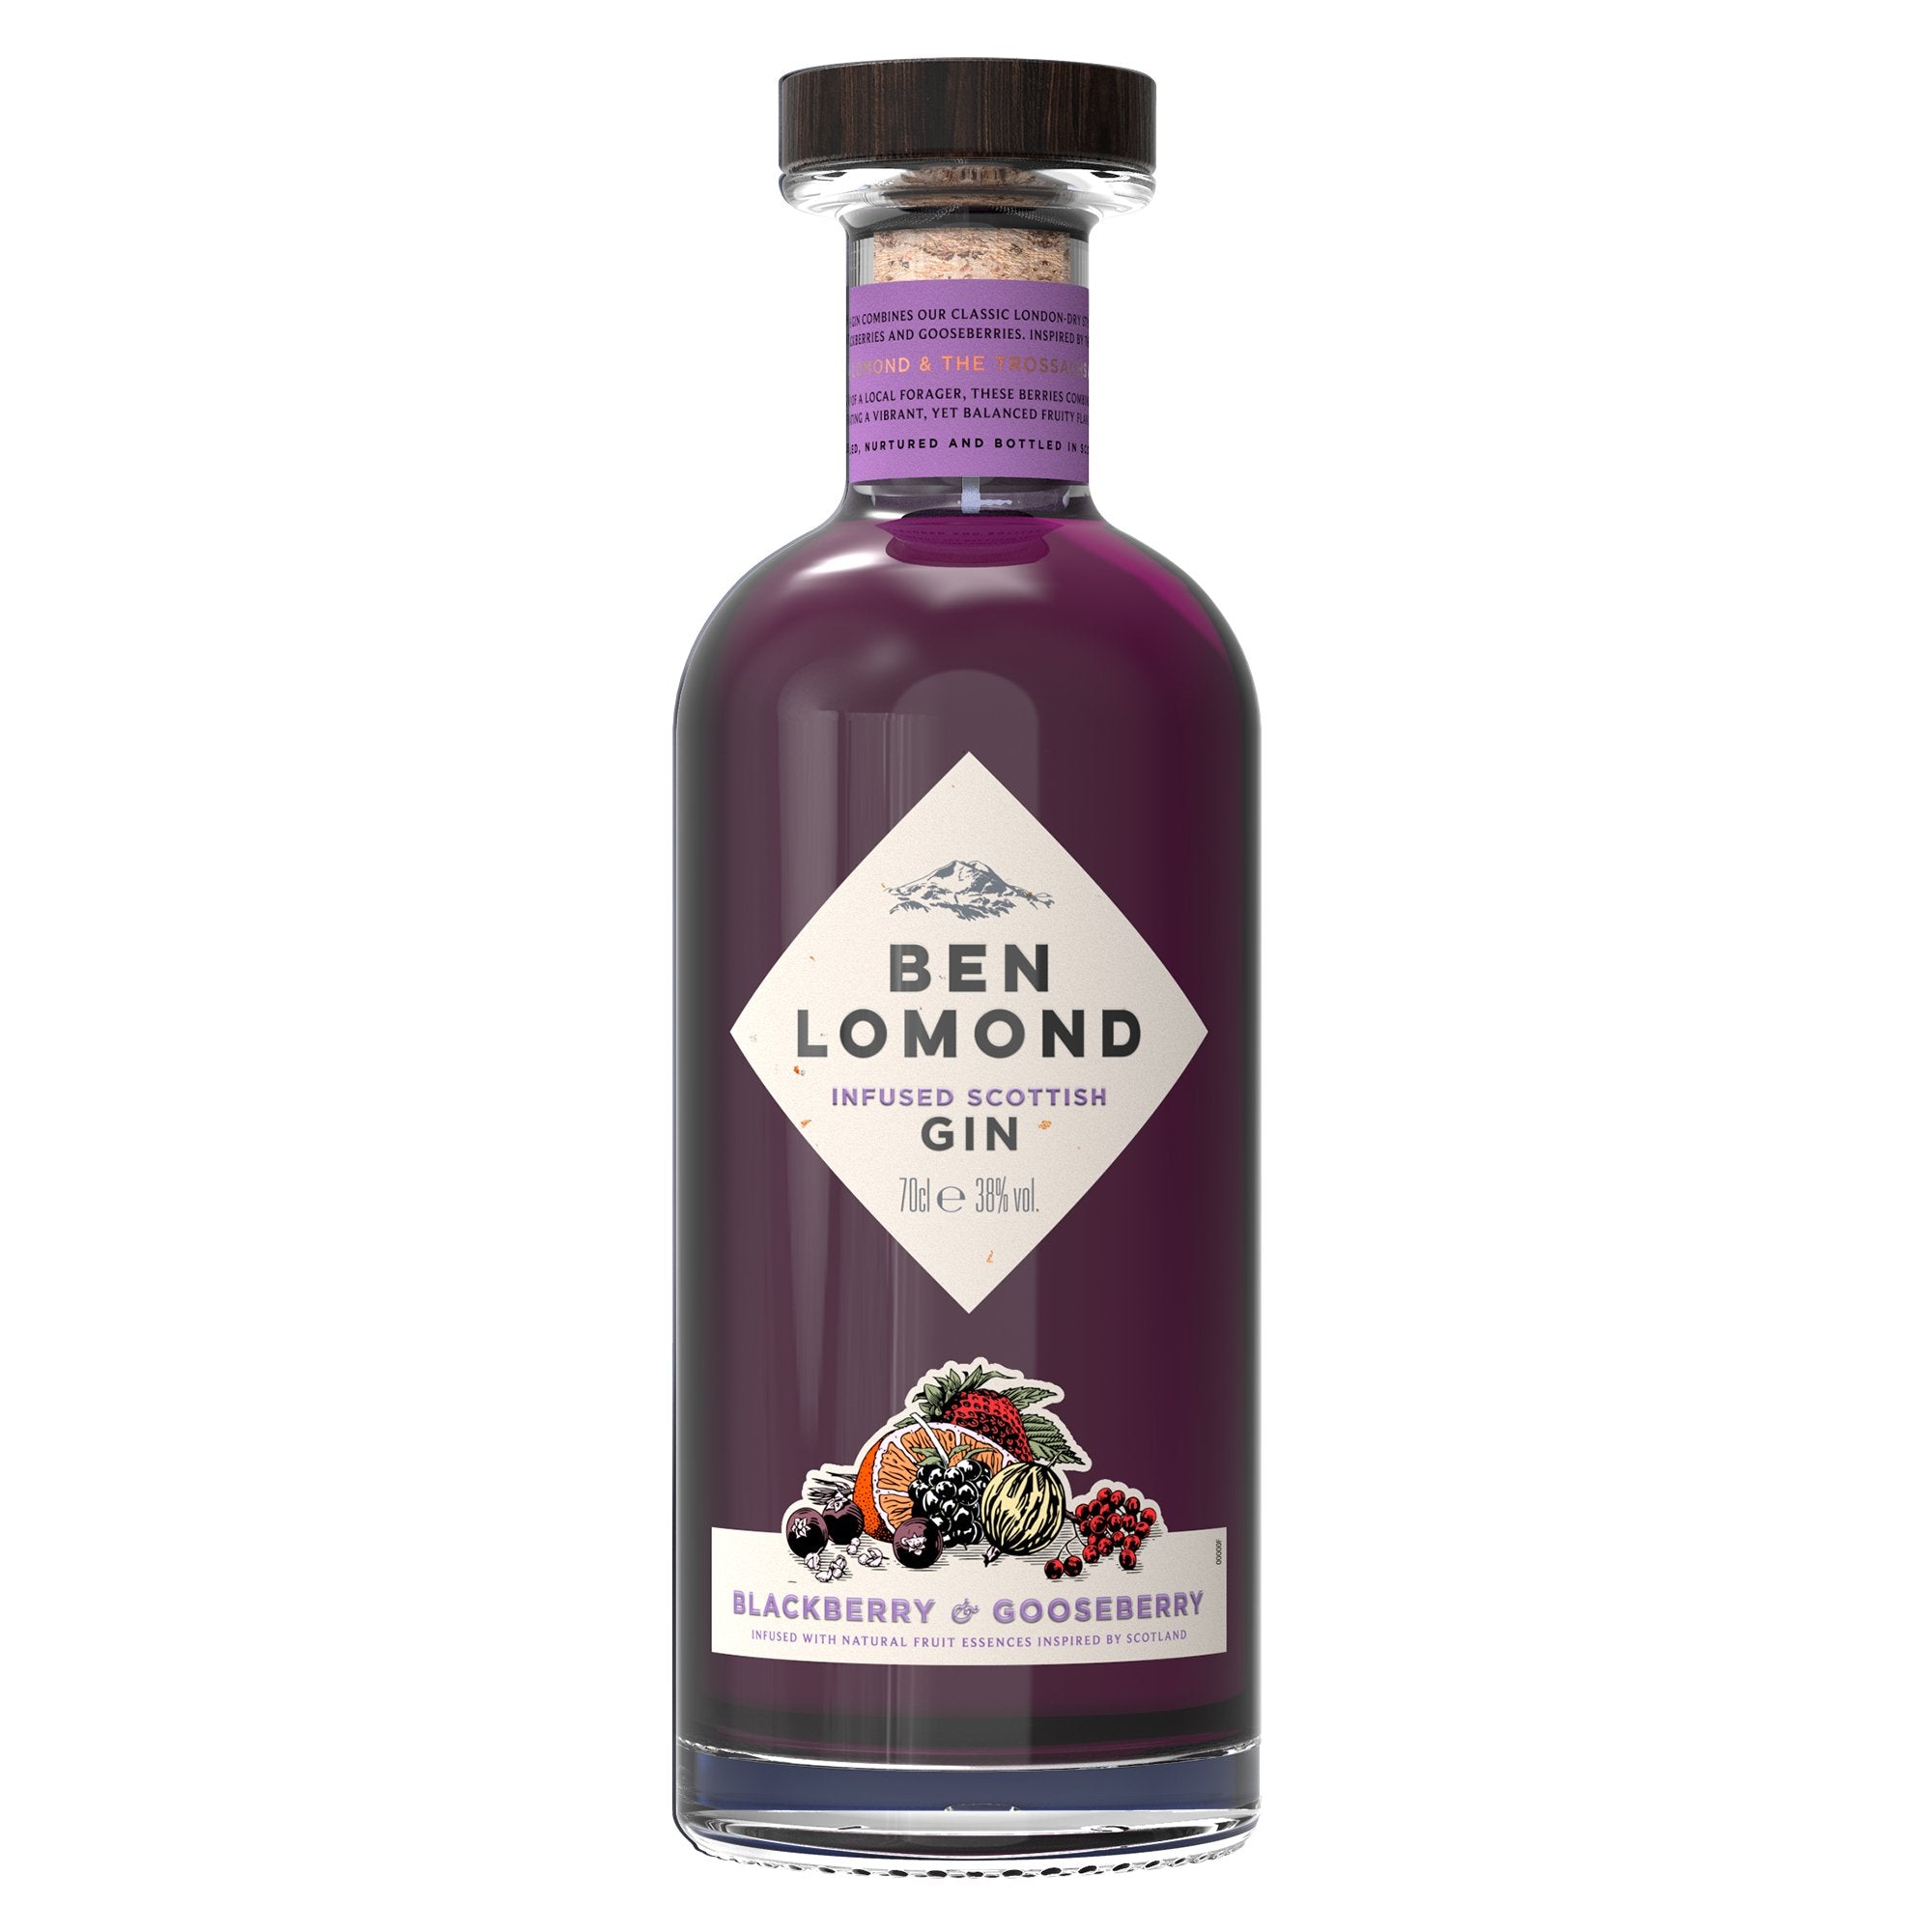 Ben Lomond Blackberry & Gooseberry Gin - Loch Lomond Group